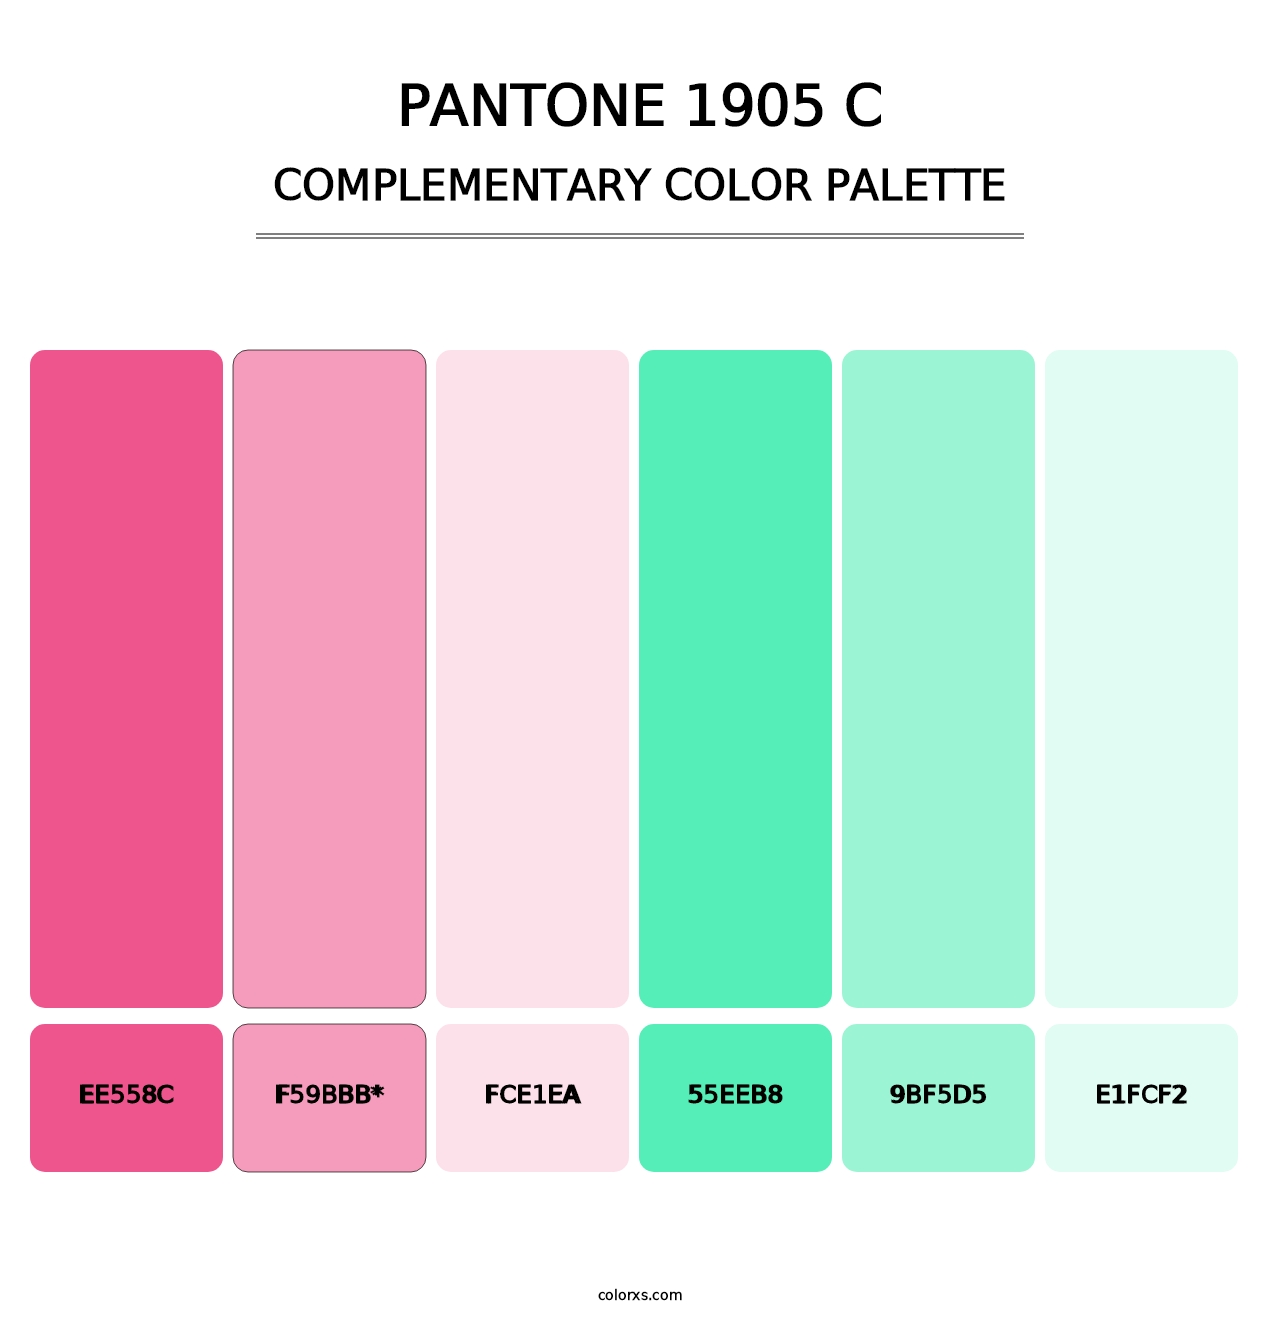 PANTONE 1905 C - Complementary Color Palette